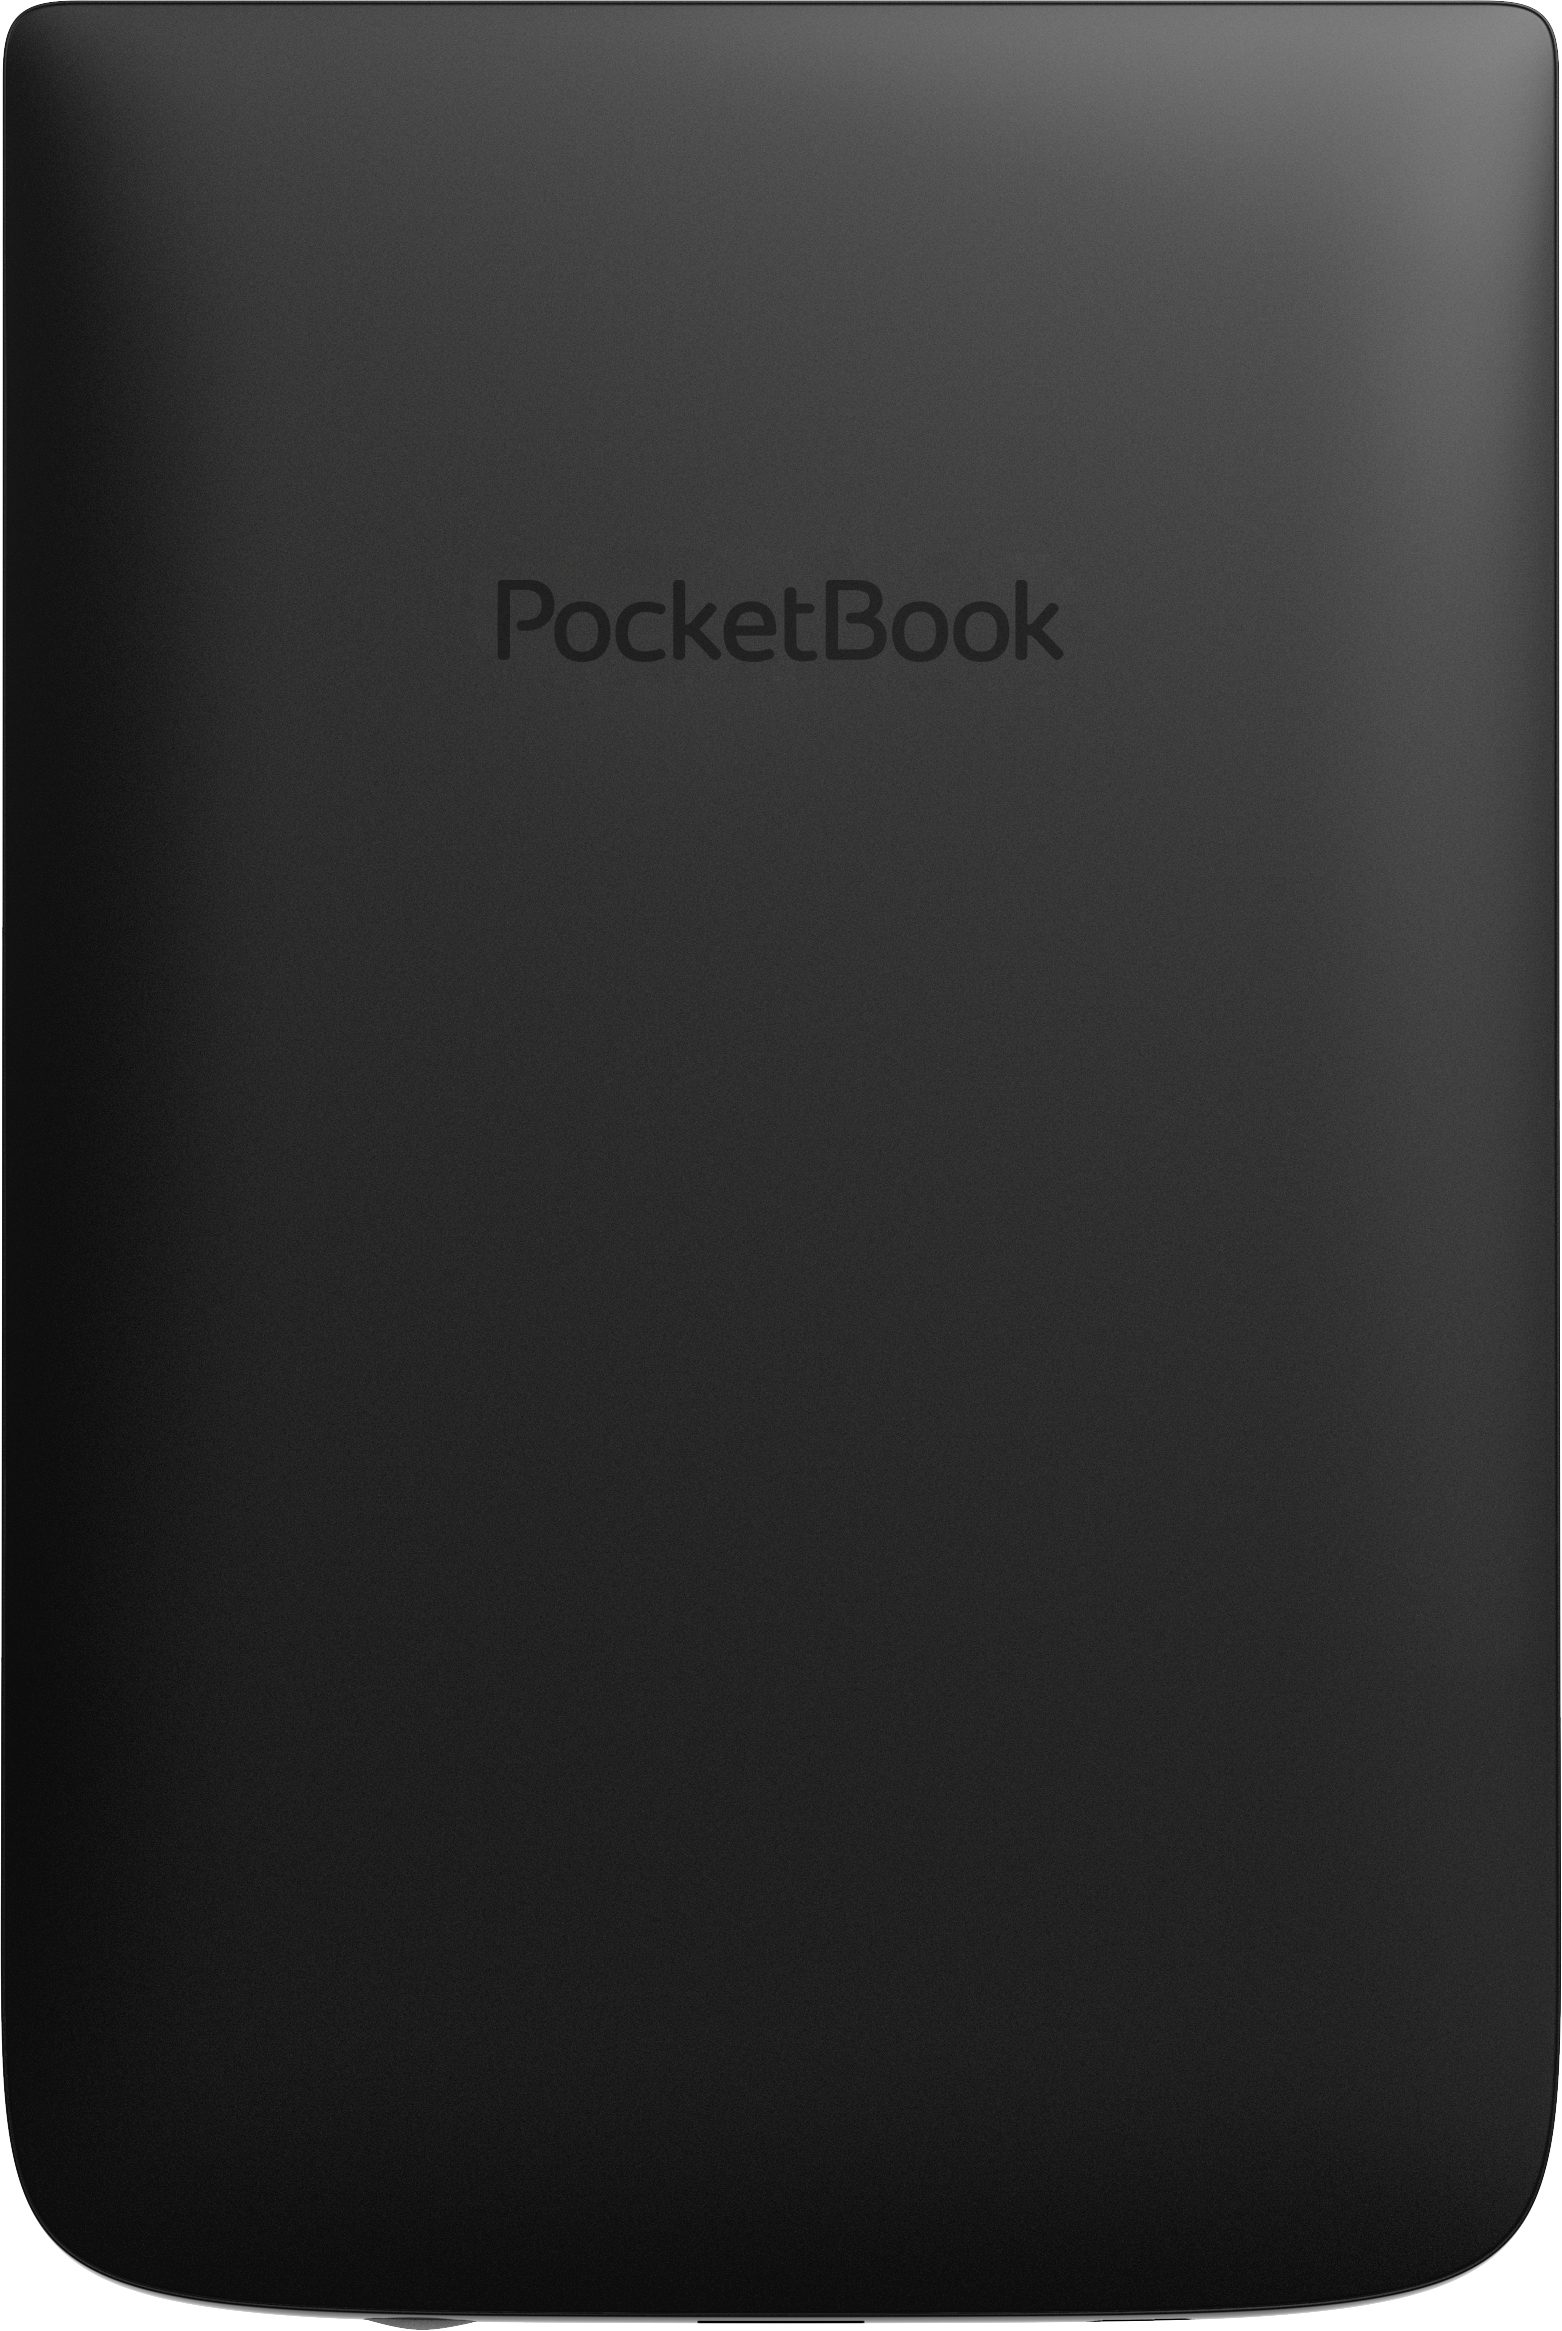 PocketBook Basic Lux 3 - InkBlack